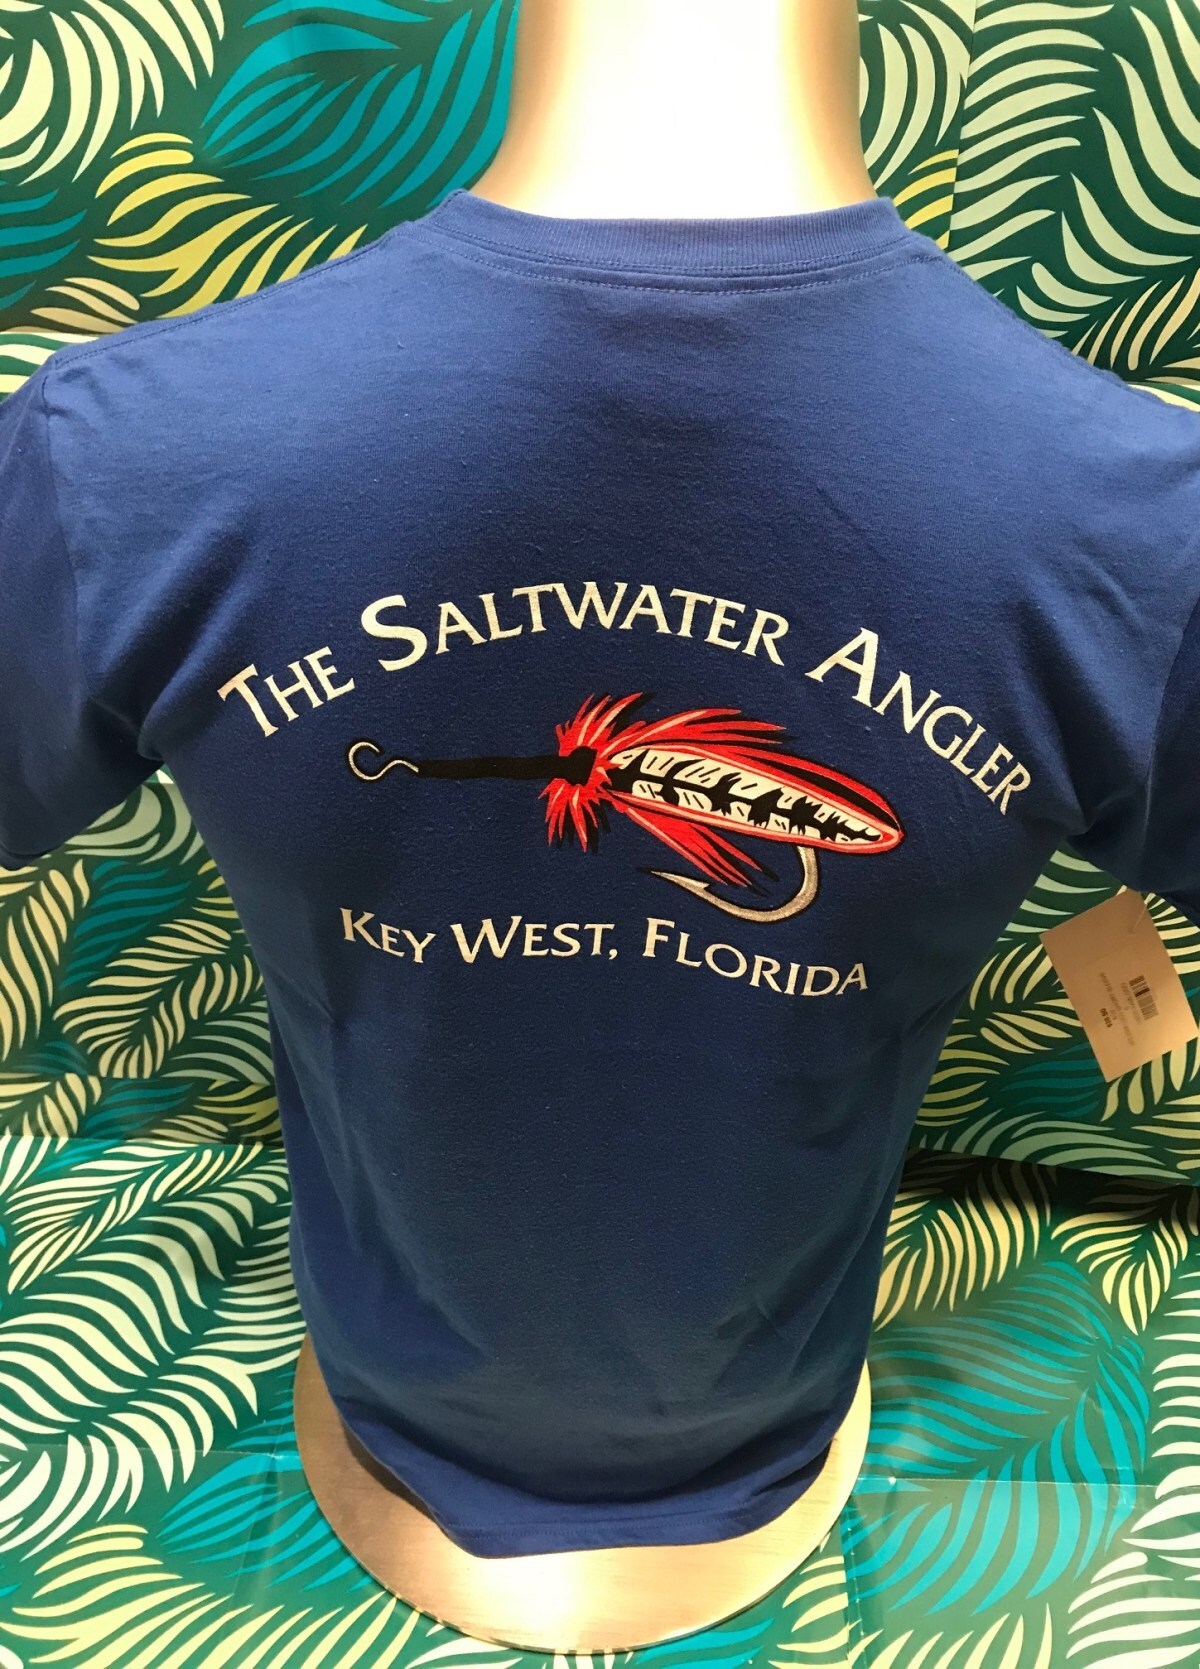 Key West Fishing, Saltwater Angler Key West, Fish key west